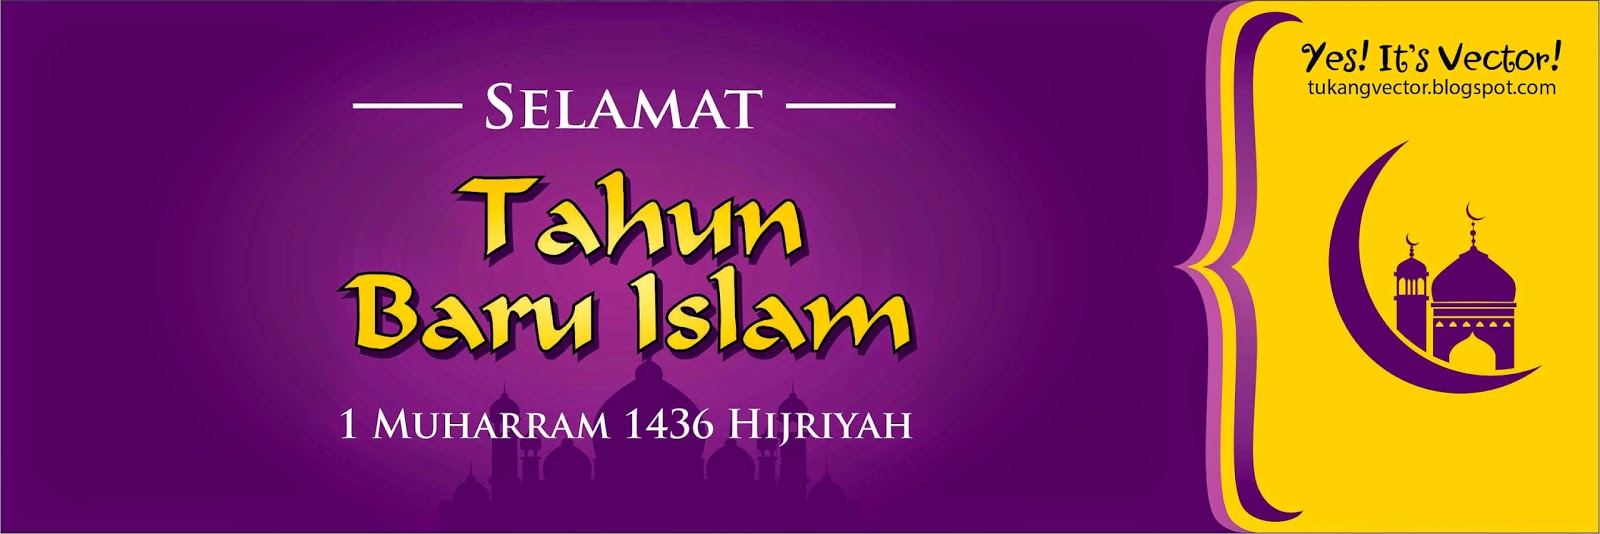 MI HAYATUL ISLAM: DOWNLOAD TEMPLATE BANNER TAHUN BARU 